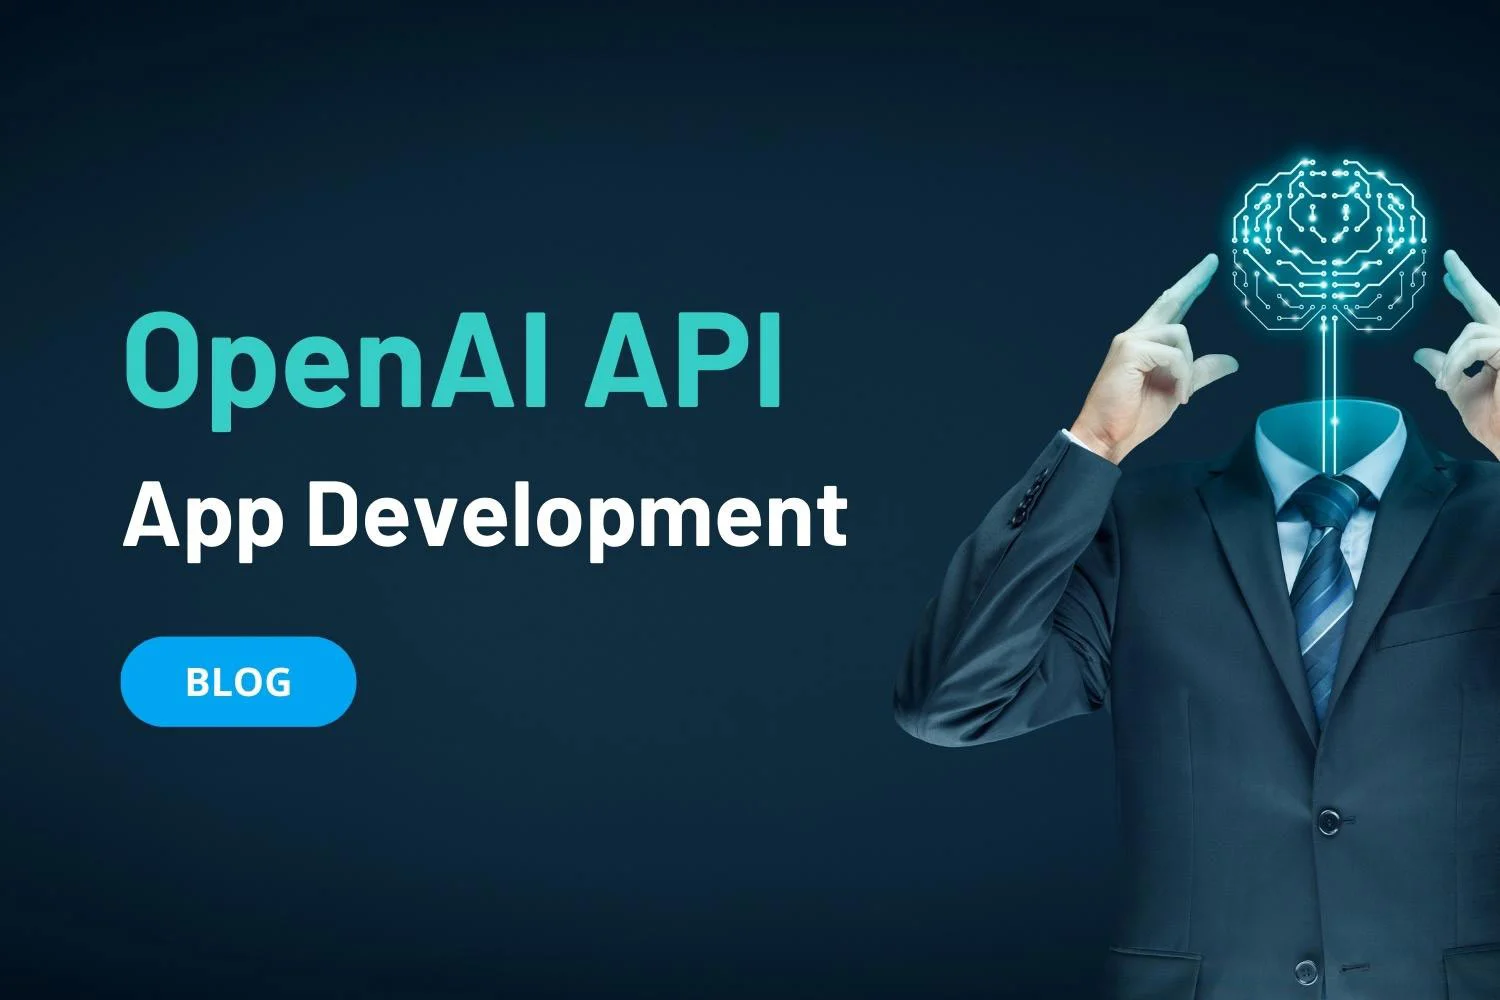 OpenAI API App Development